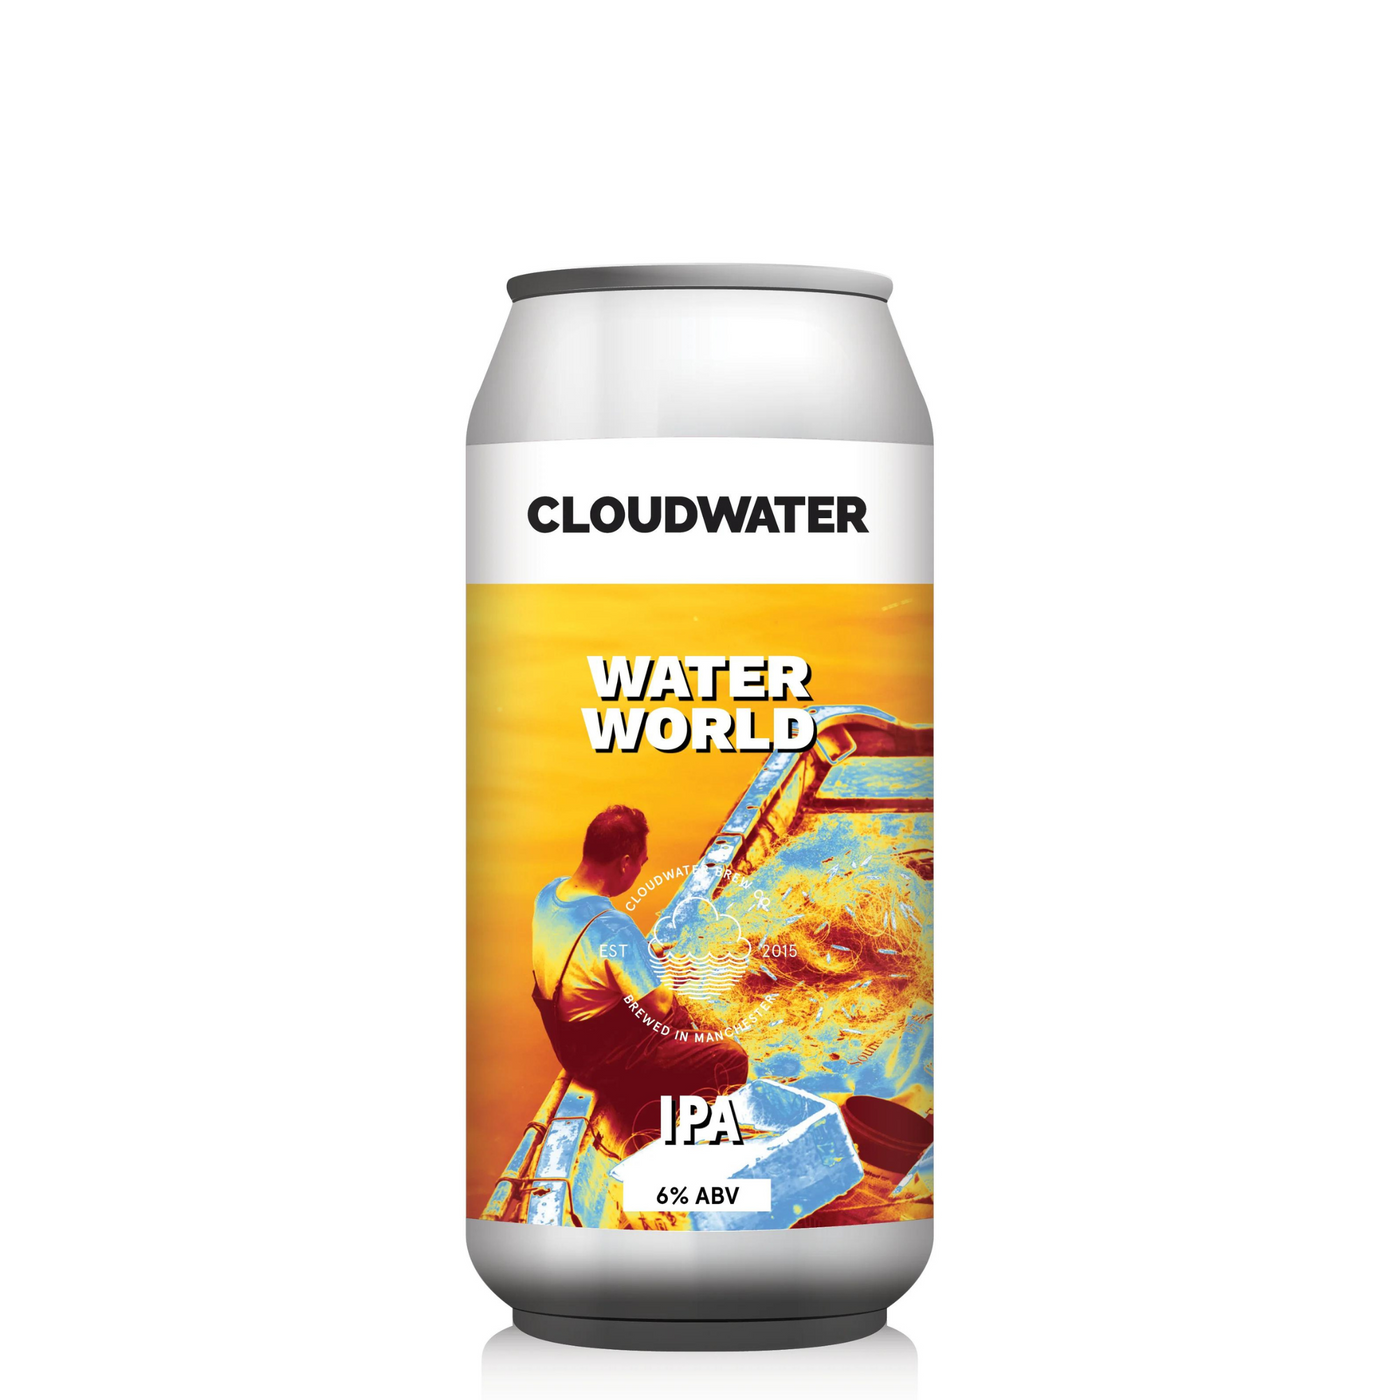 Cloudwater Water World IPA 440ml